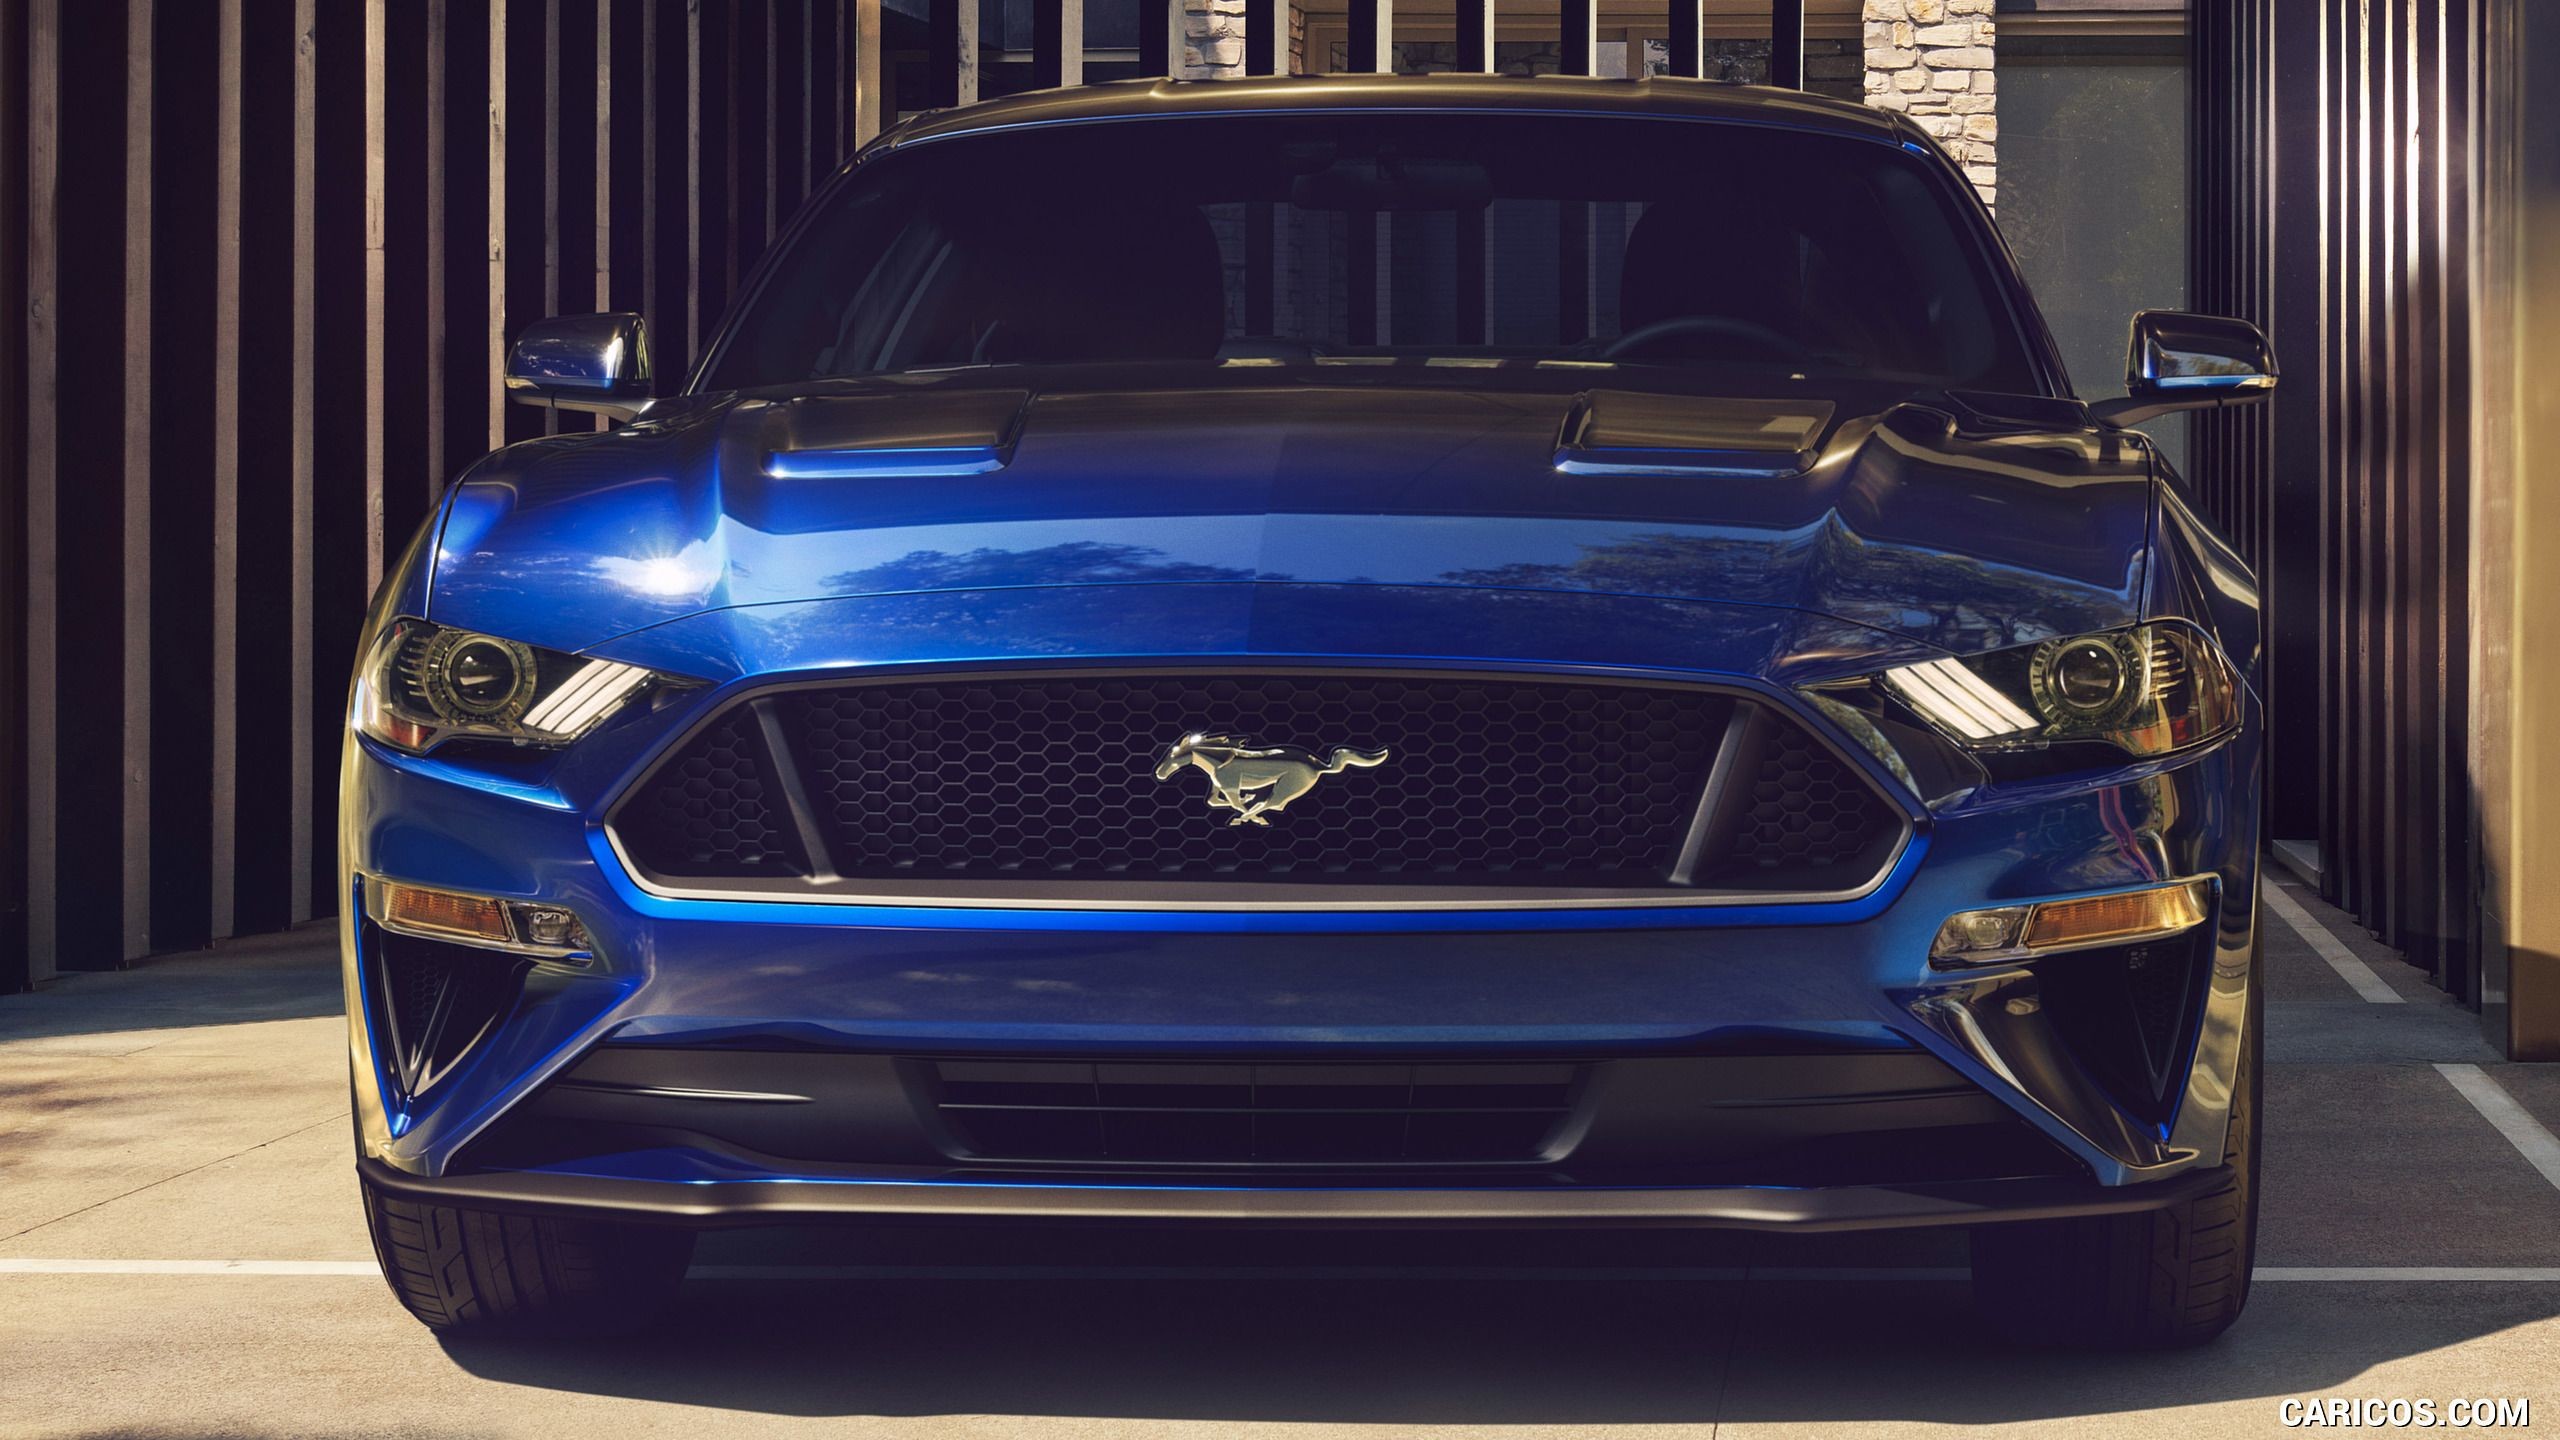 2560x1440 2018 Ford Mustang Wallpaper